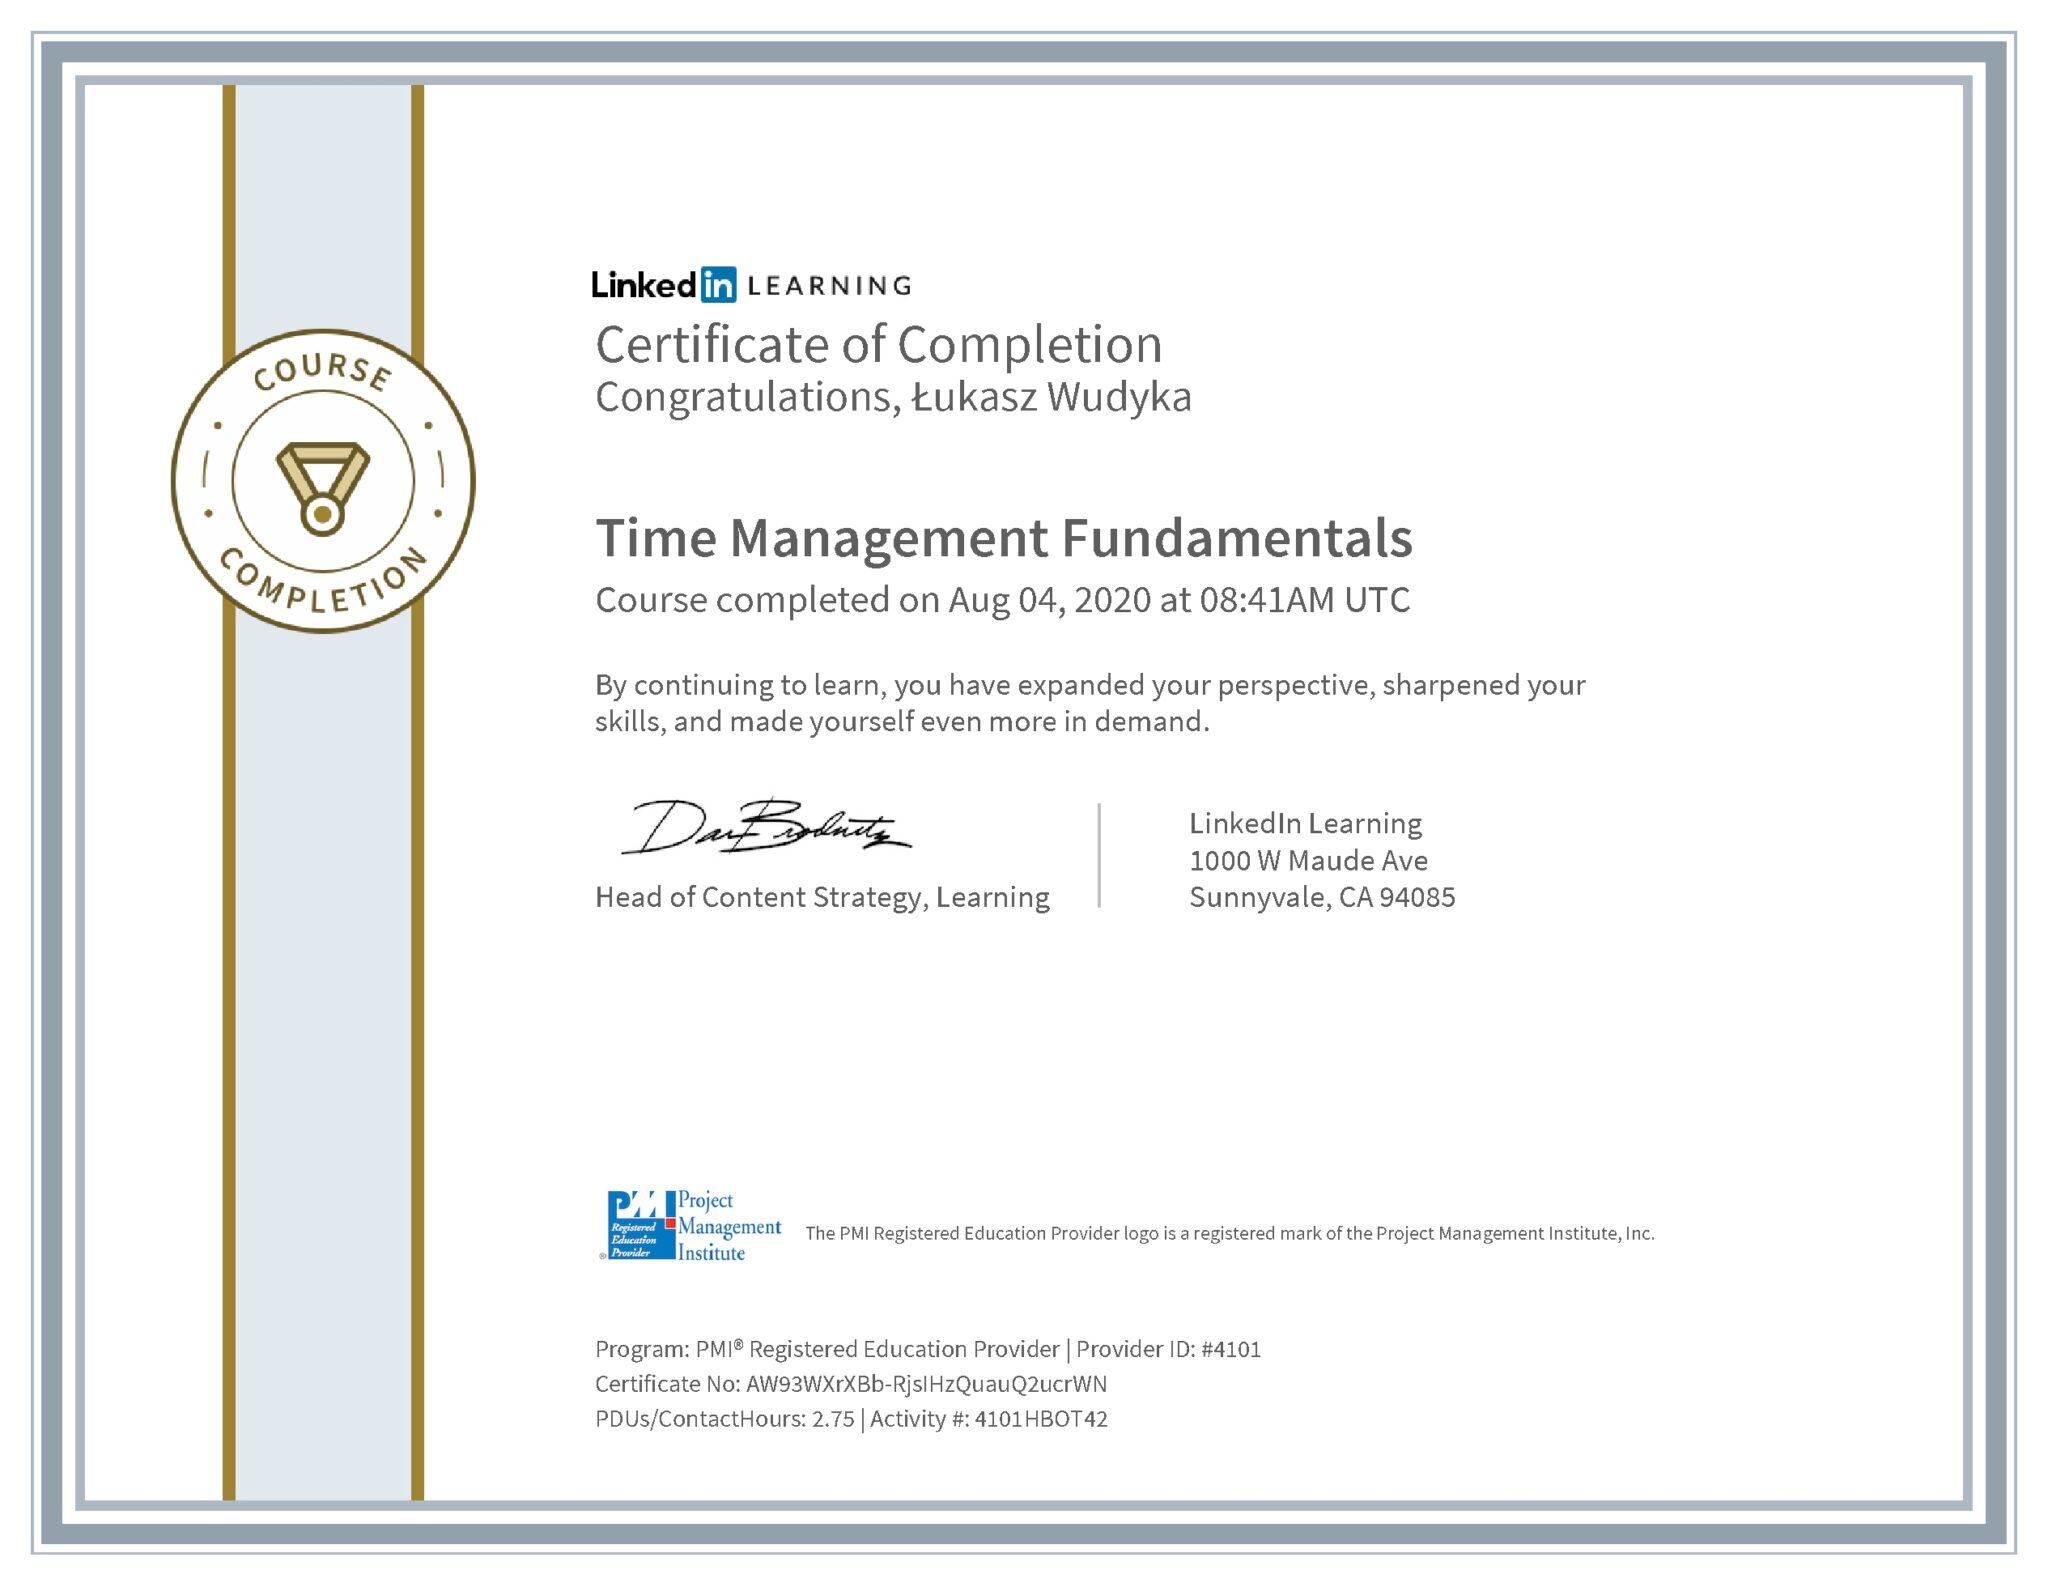 Łukasz Wudyka certyfikat LinkedIn Time Management Fundamentals PMI